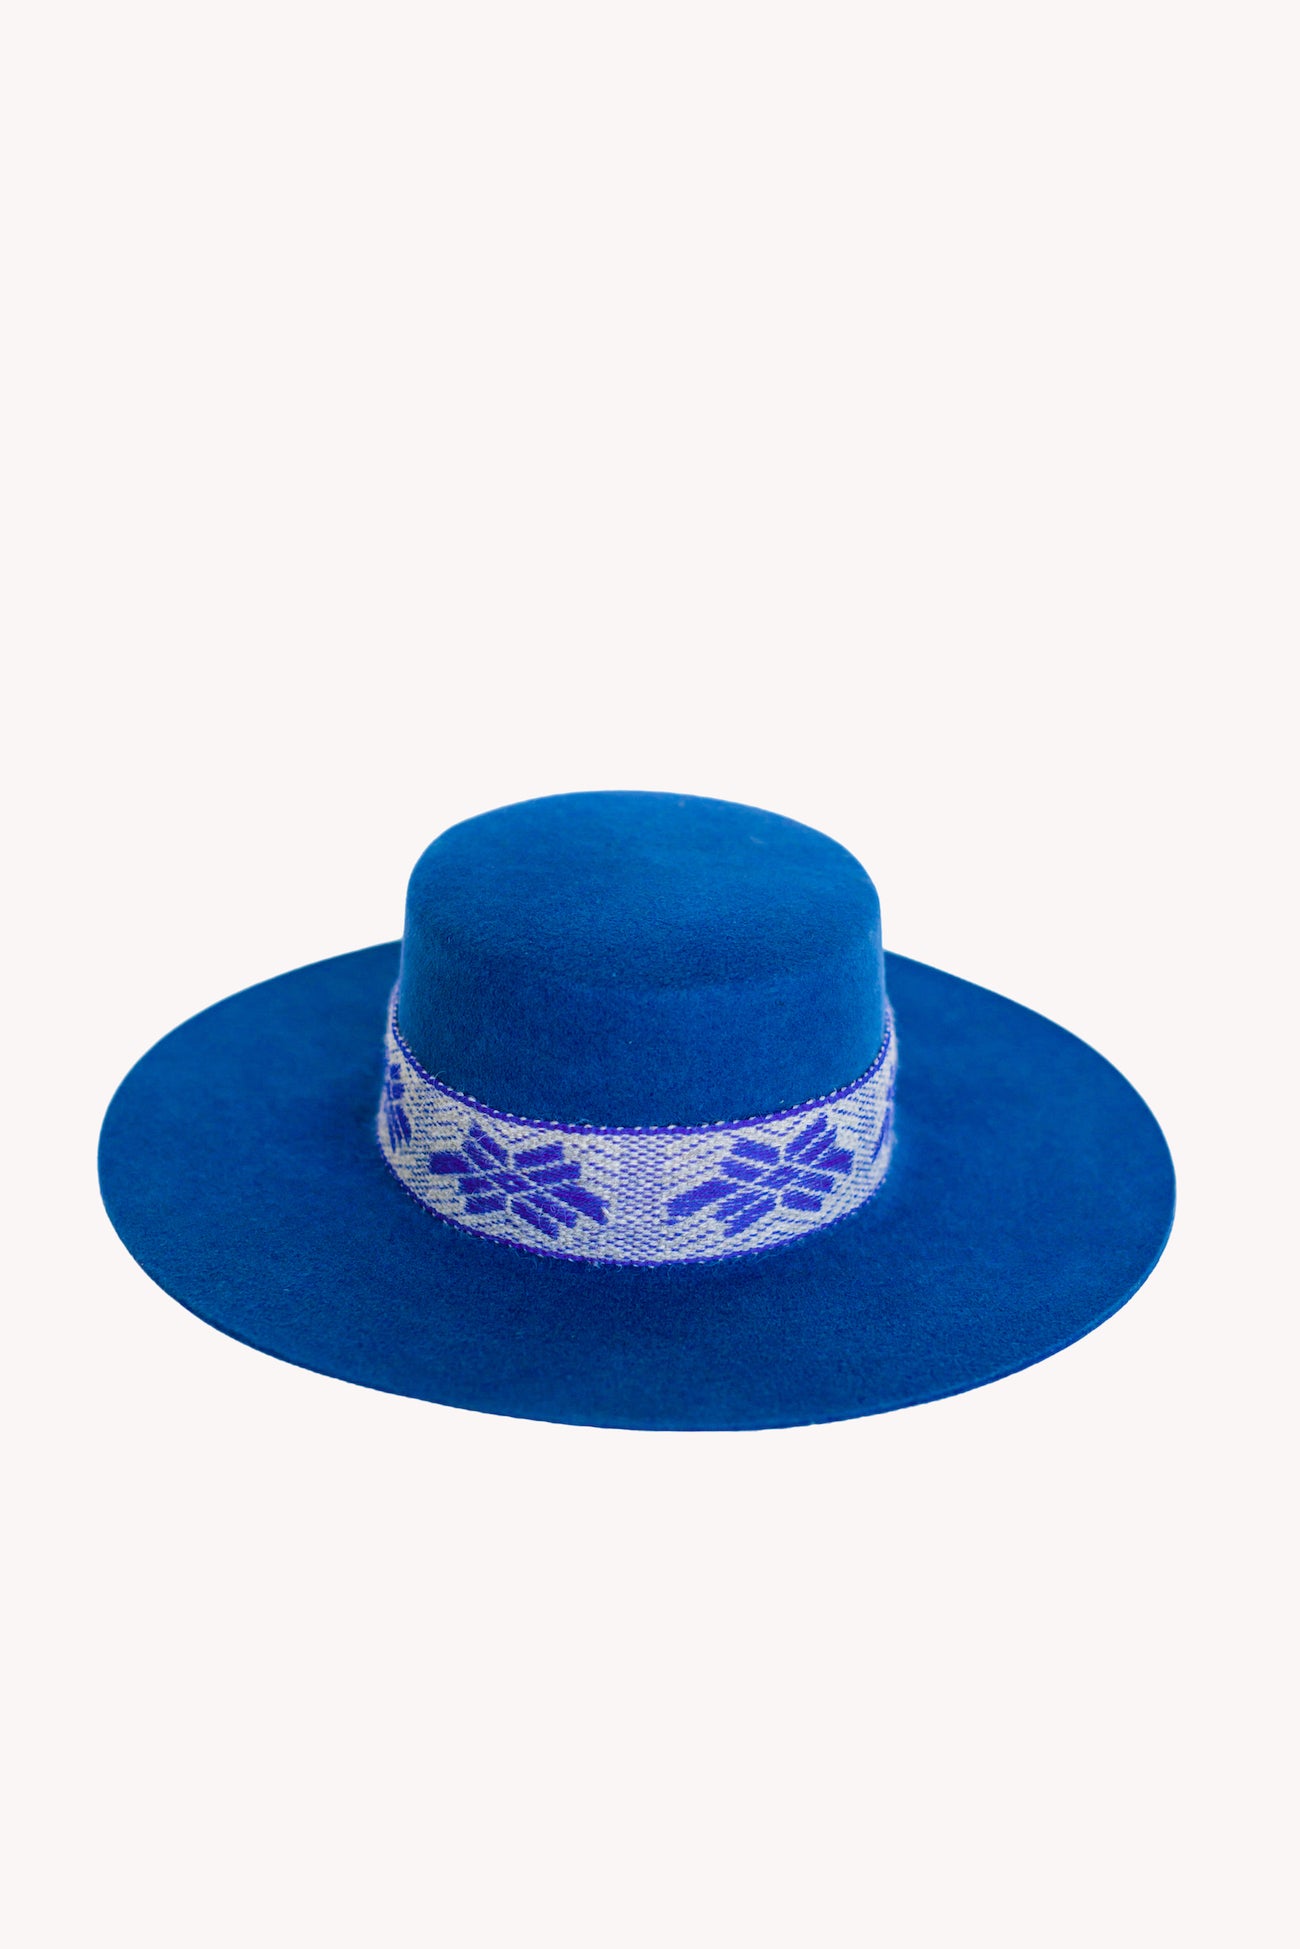 Blue Spanish style alpaca wool Peru hat